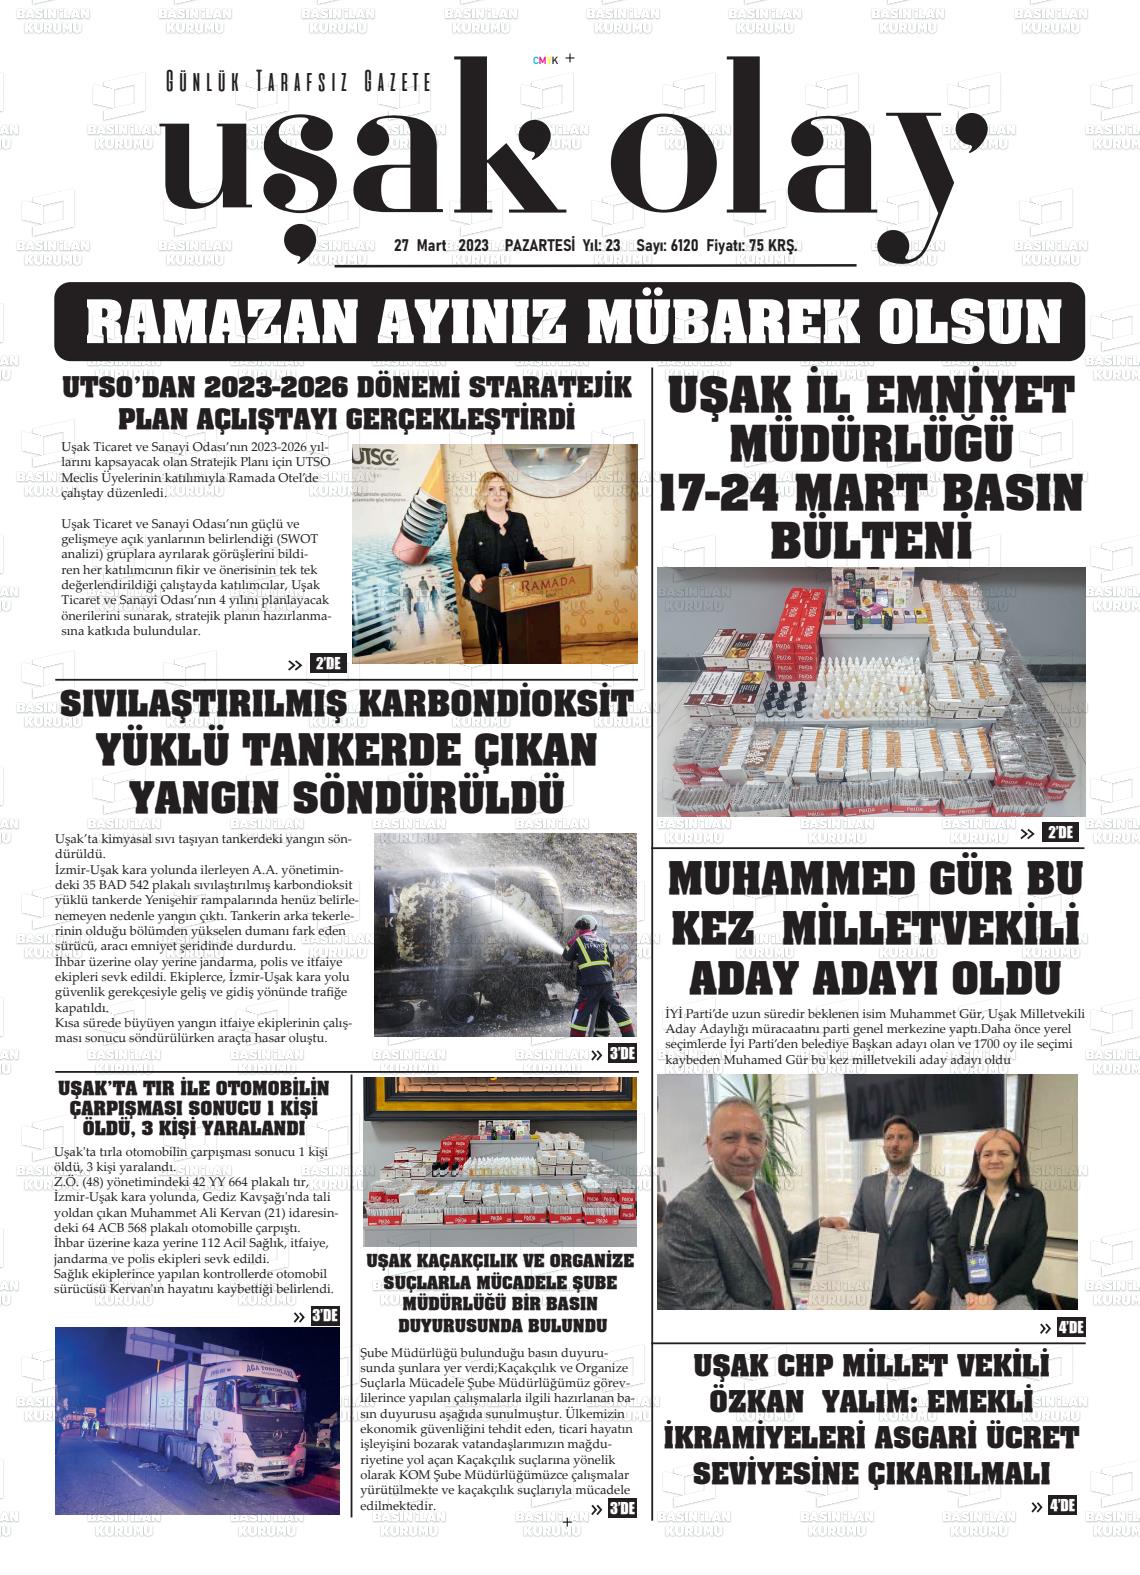 27 Mart 2023 Uşak Olay Gazete Manşeti